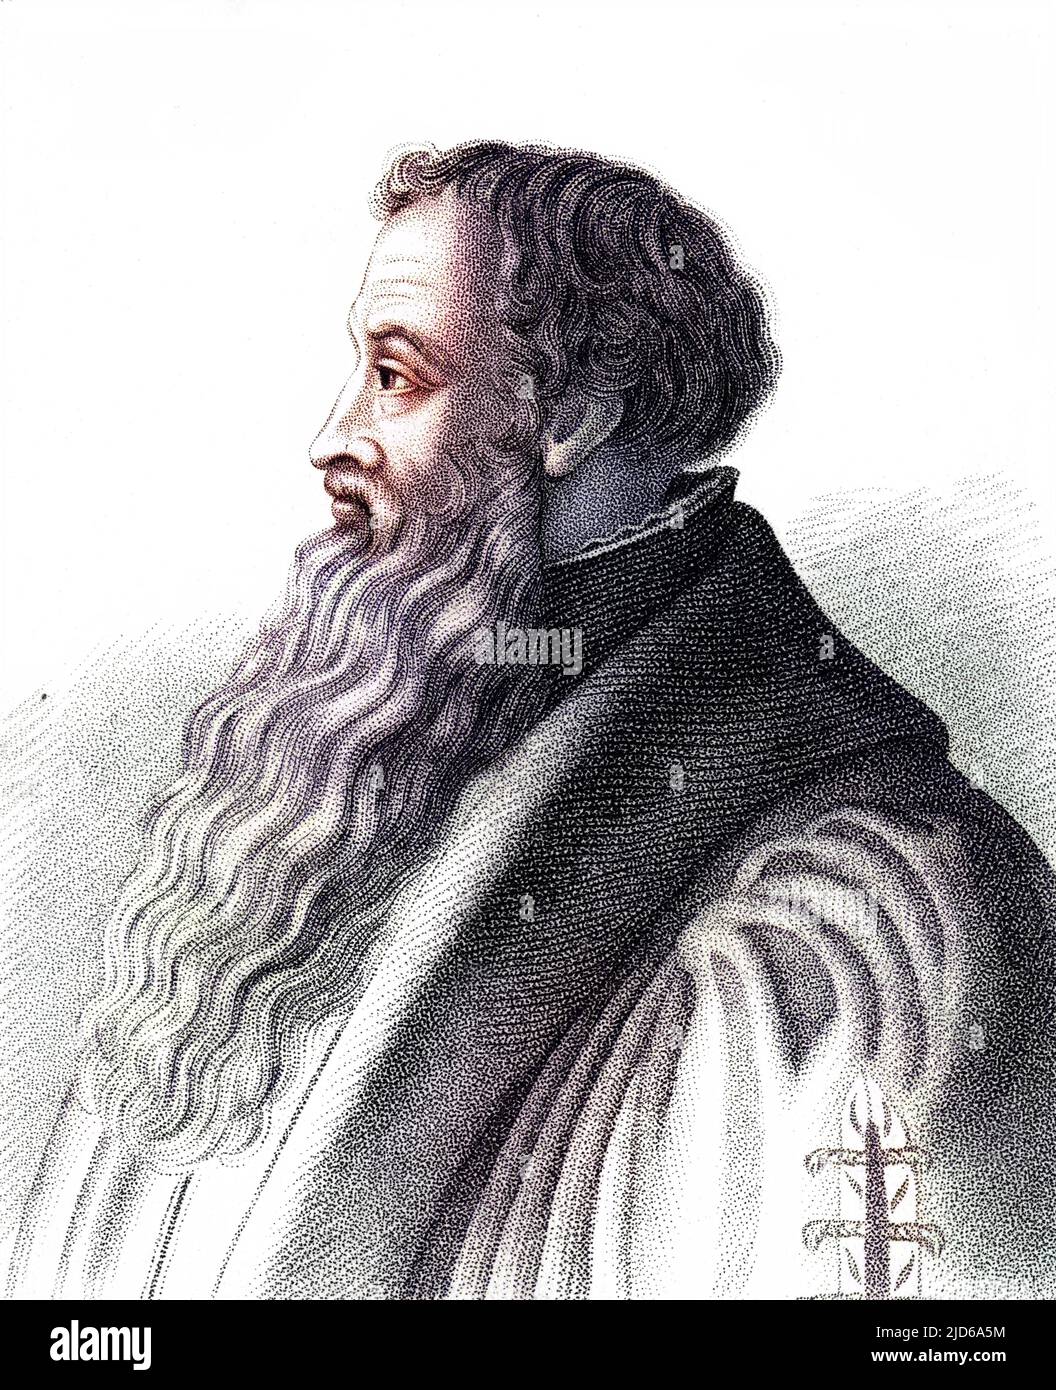 JAN A' LASKI Polish - English scholar and reformer. Colourised version of : 10162844       Date: 1499 - 1560 Stock Photo